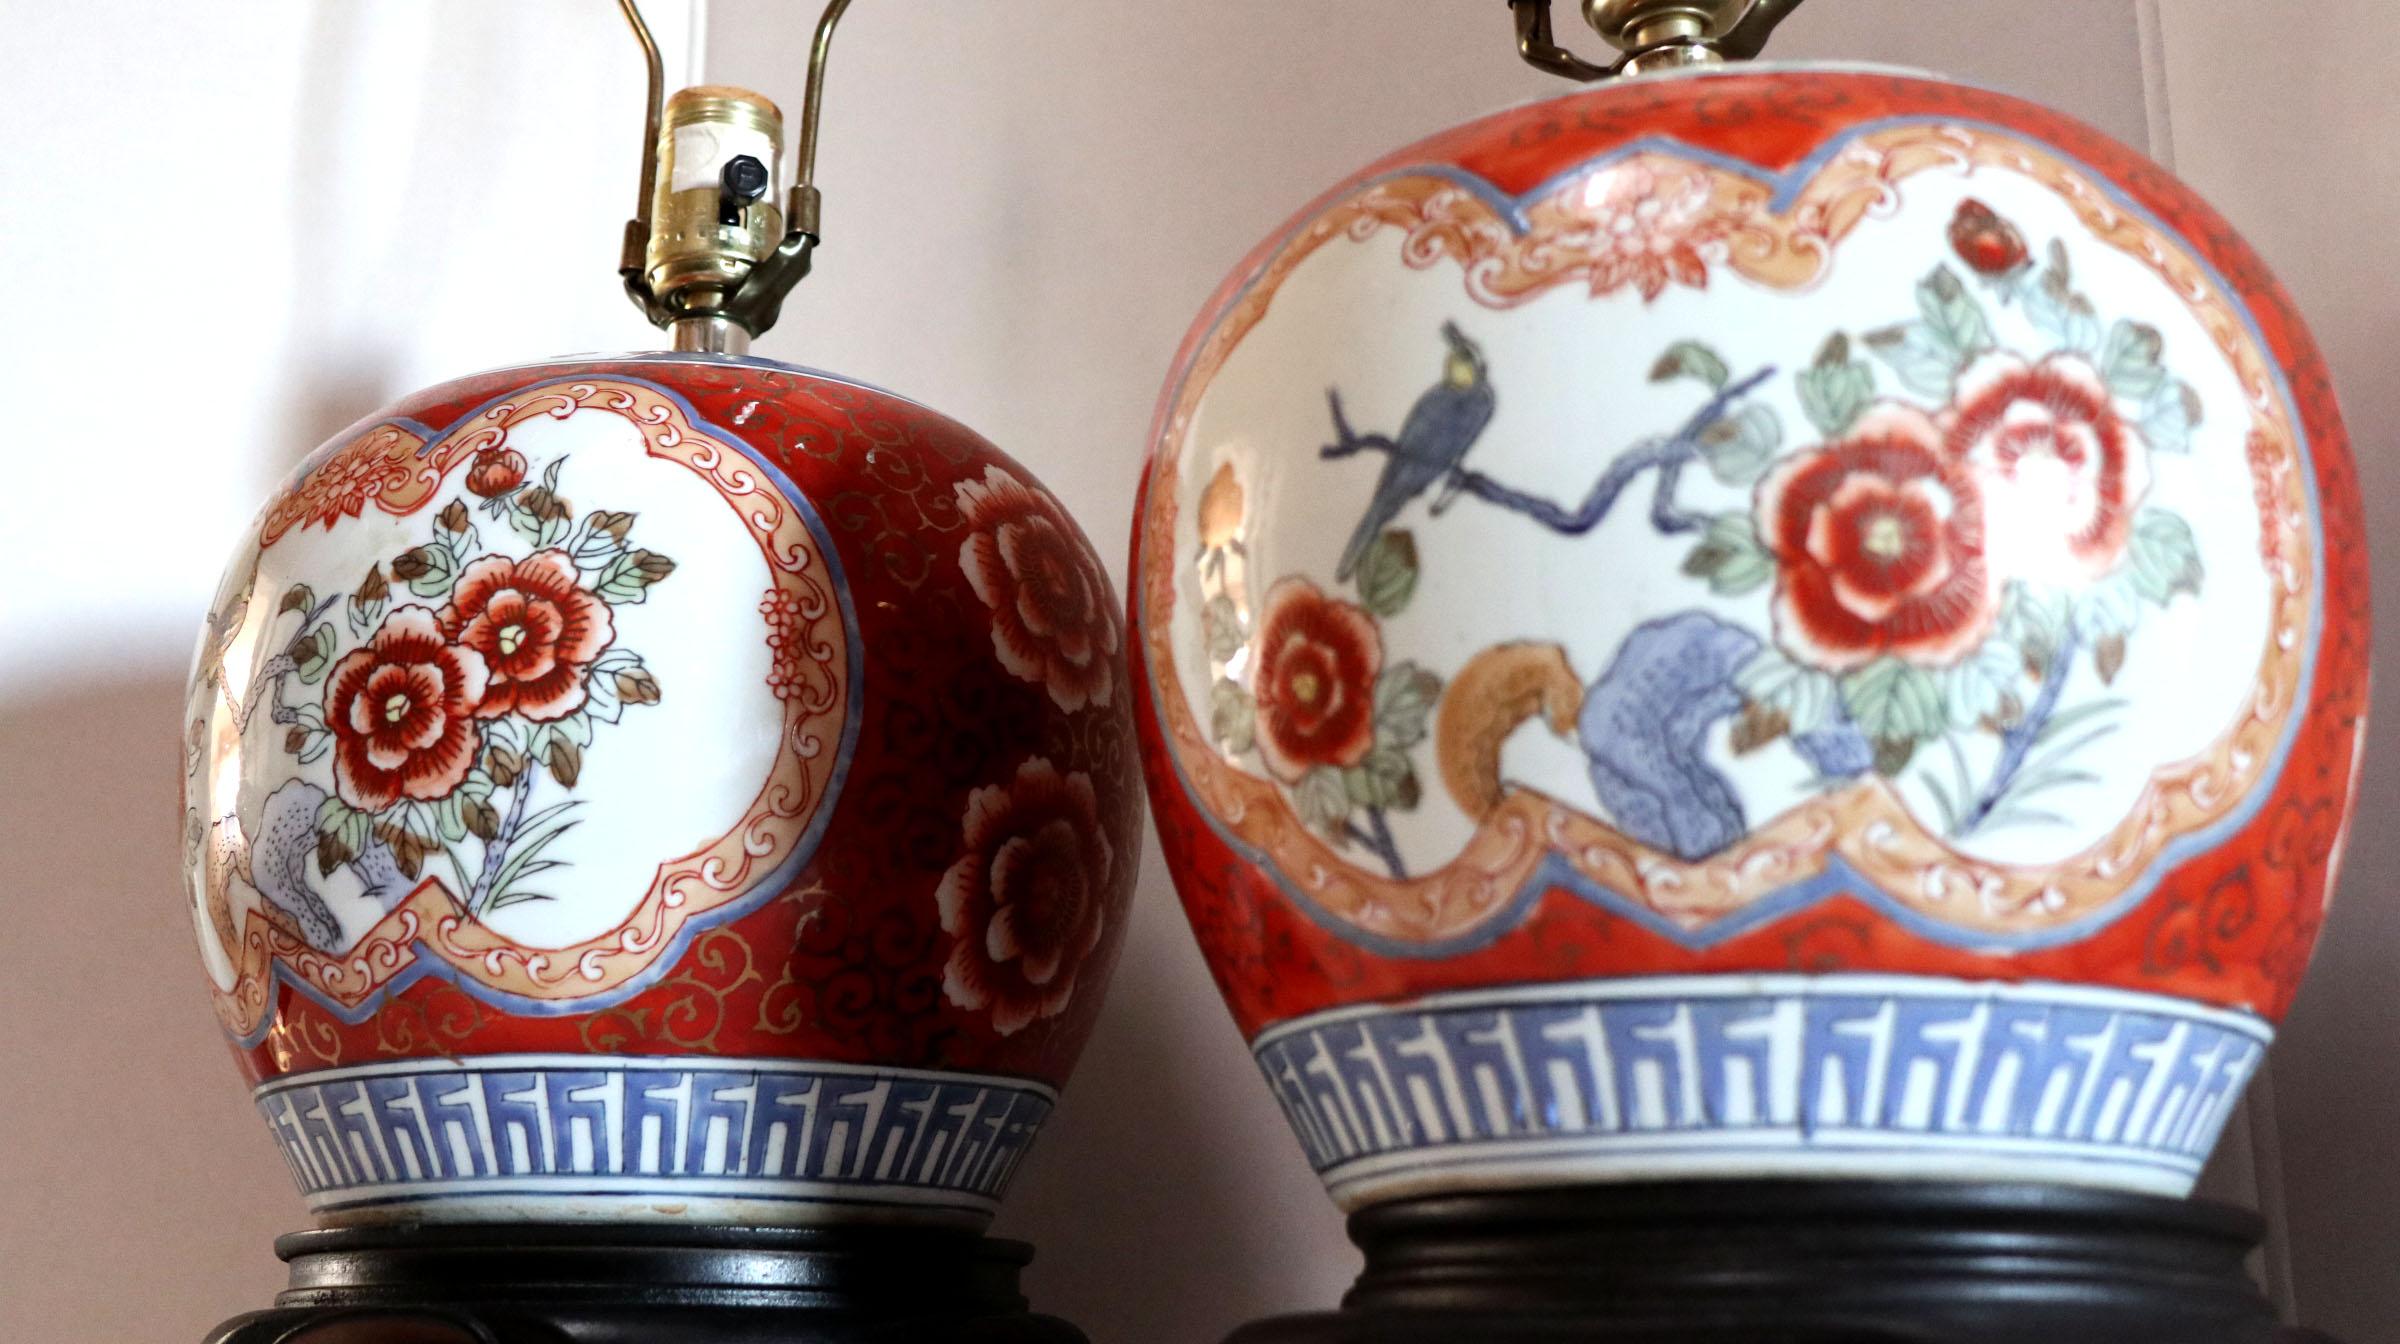 Ceramic Imari Pattern Lamps, Style of Wildwood, a Near Pair on Wood Base